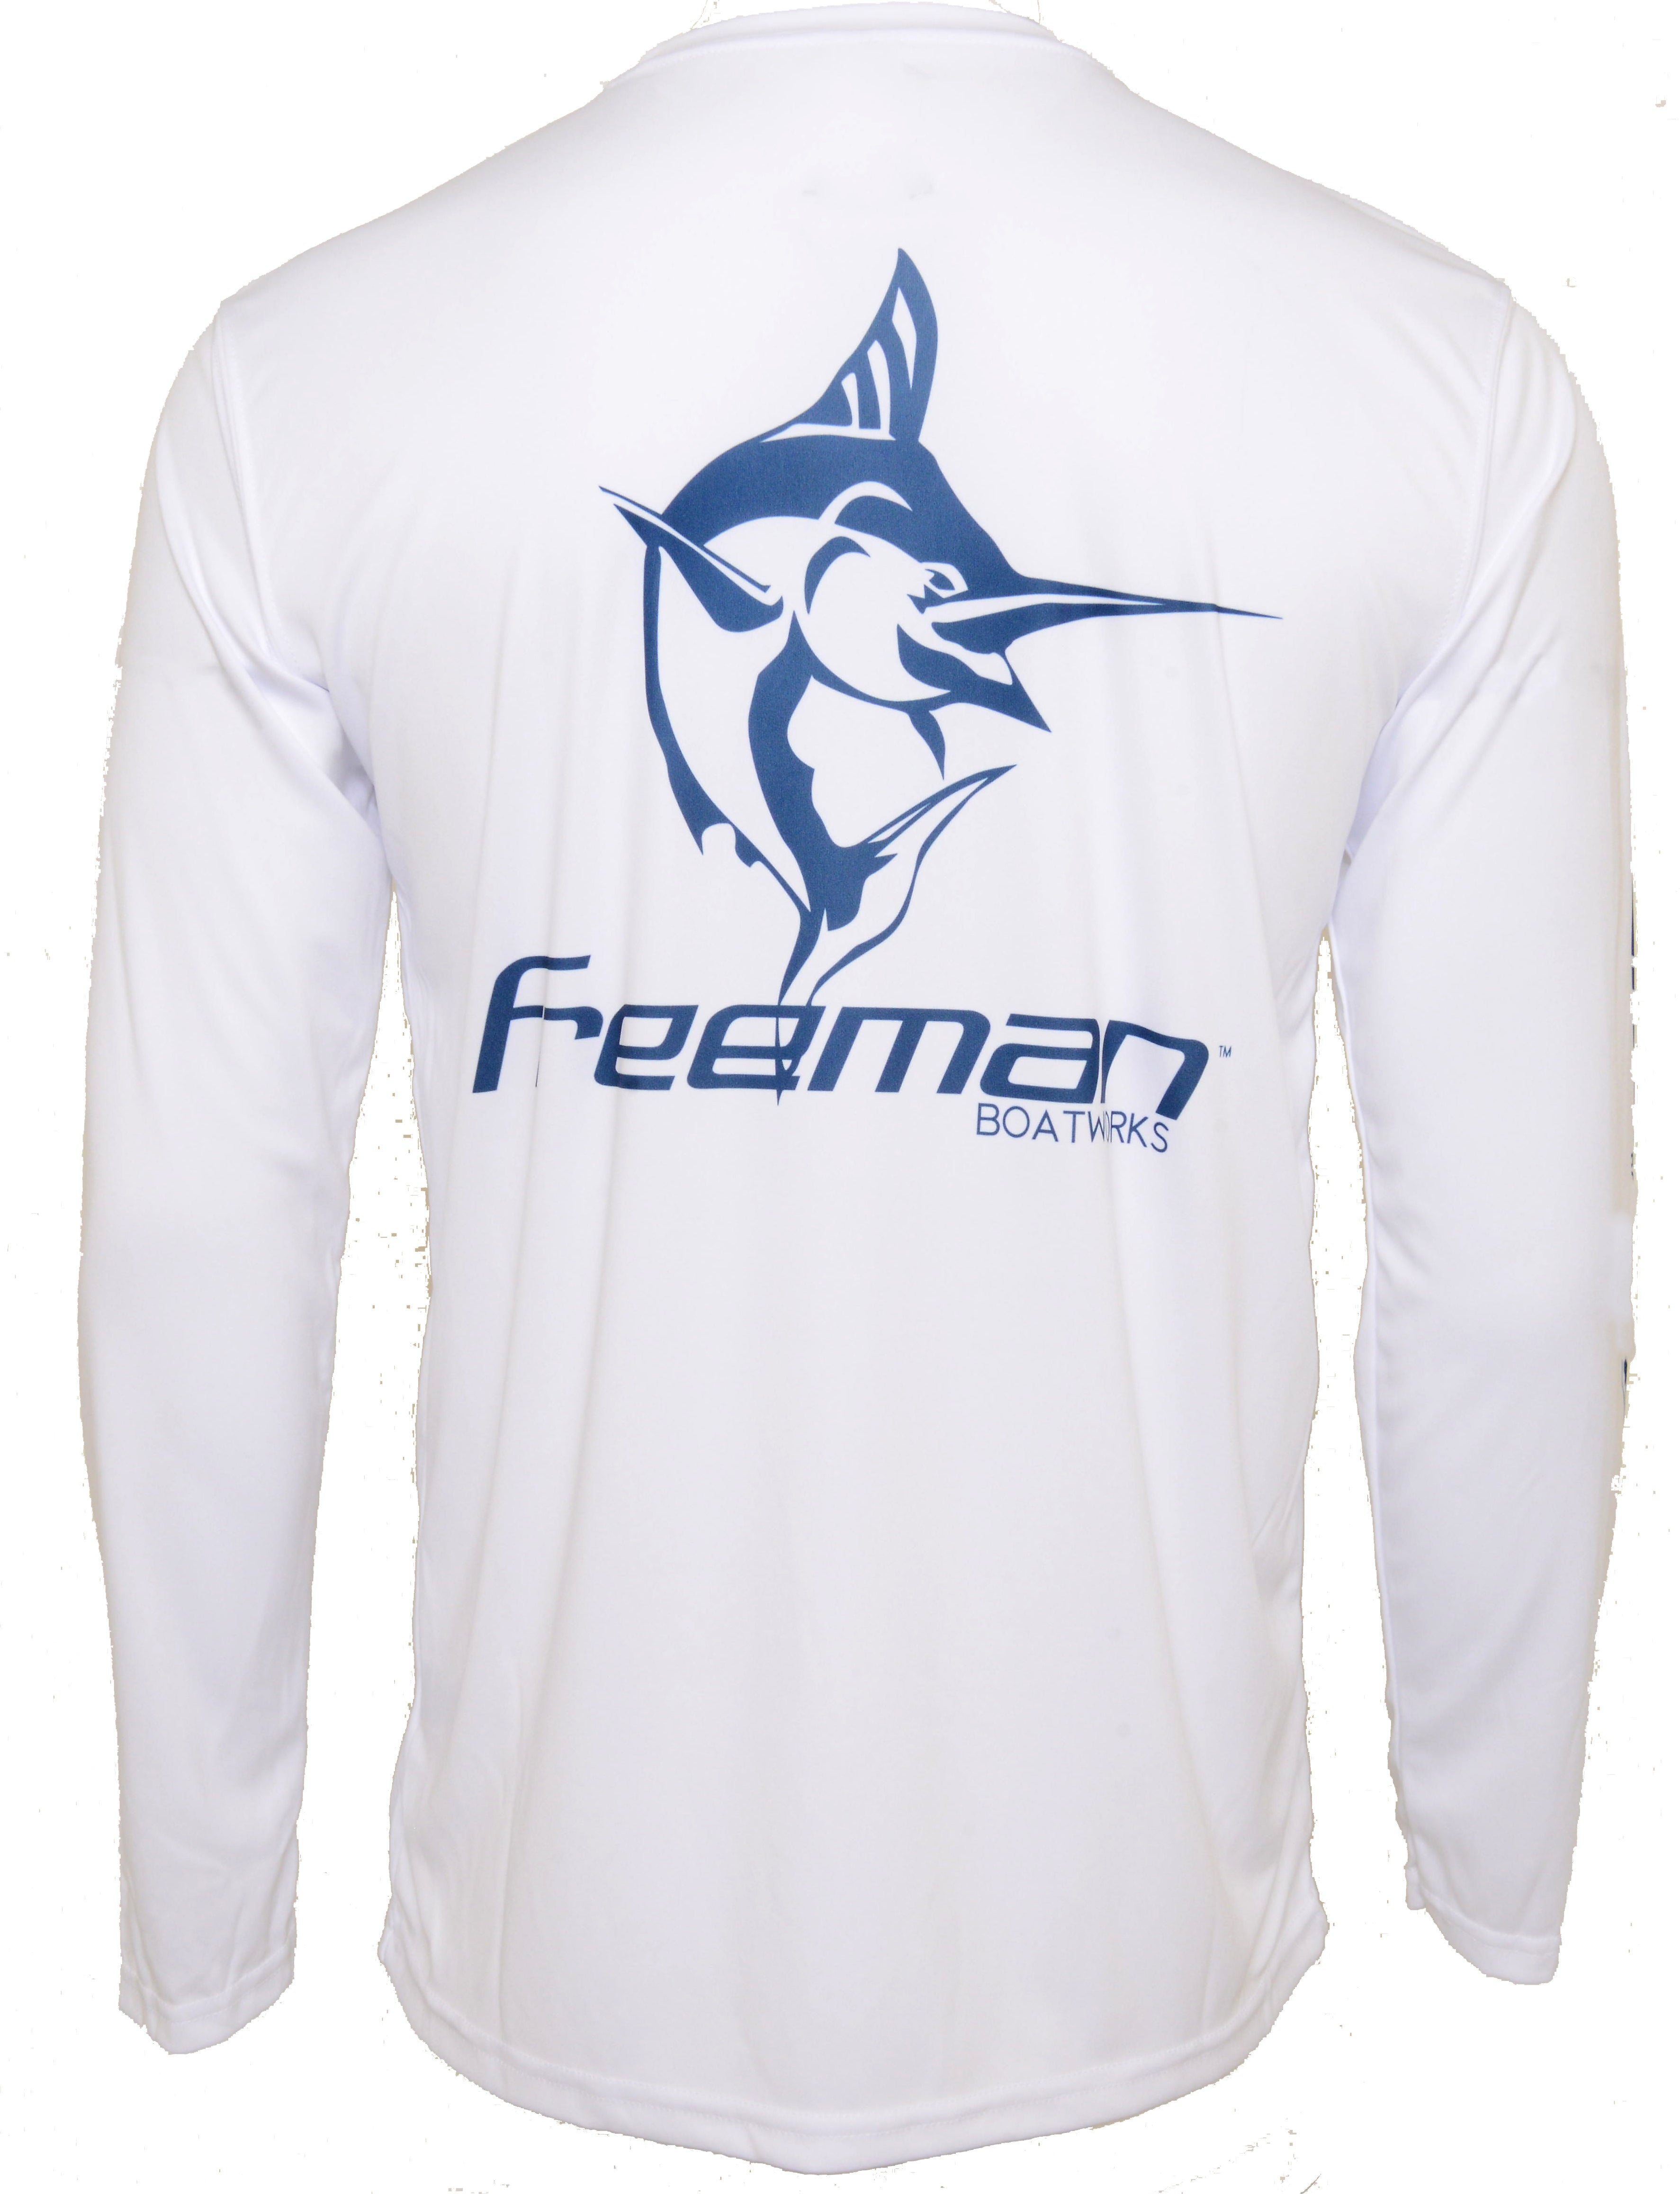 Freeman Boatworks Performance Shirt